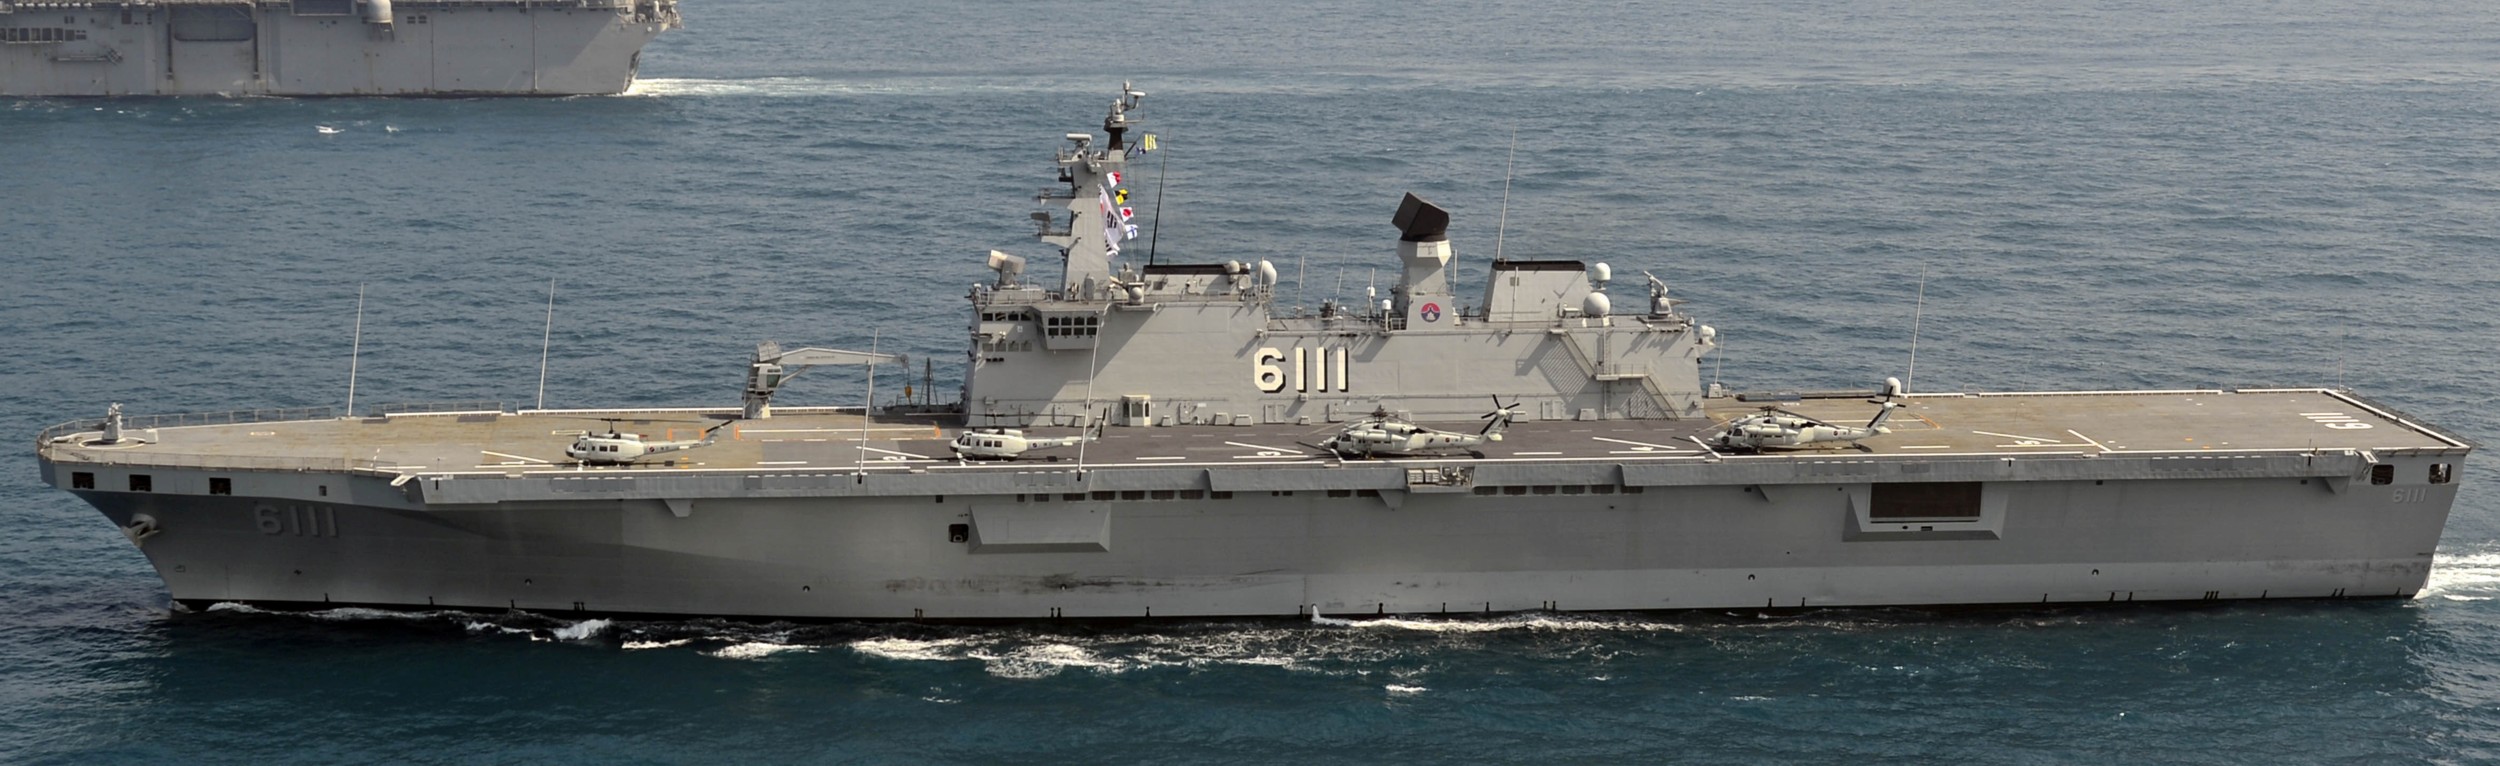 lph-6111 roks dokdo landing platform helicopter amphibious assault ship korean navy rokn 11